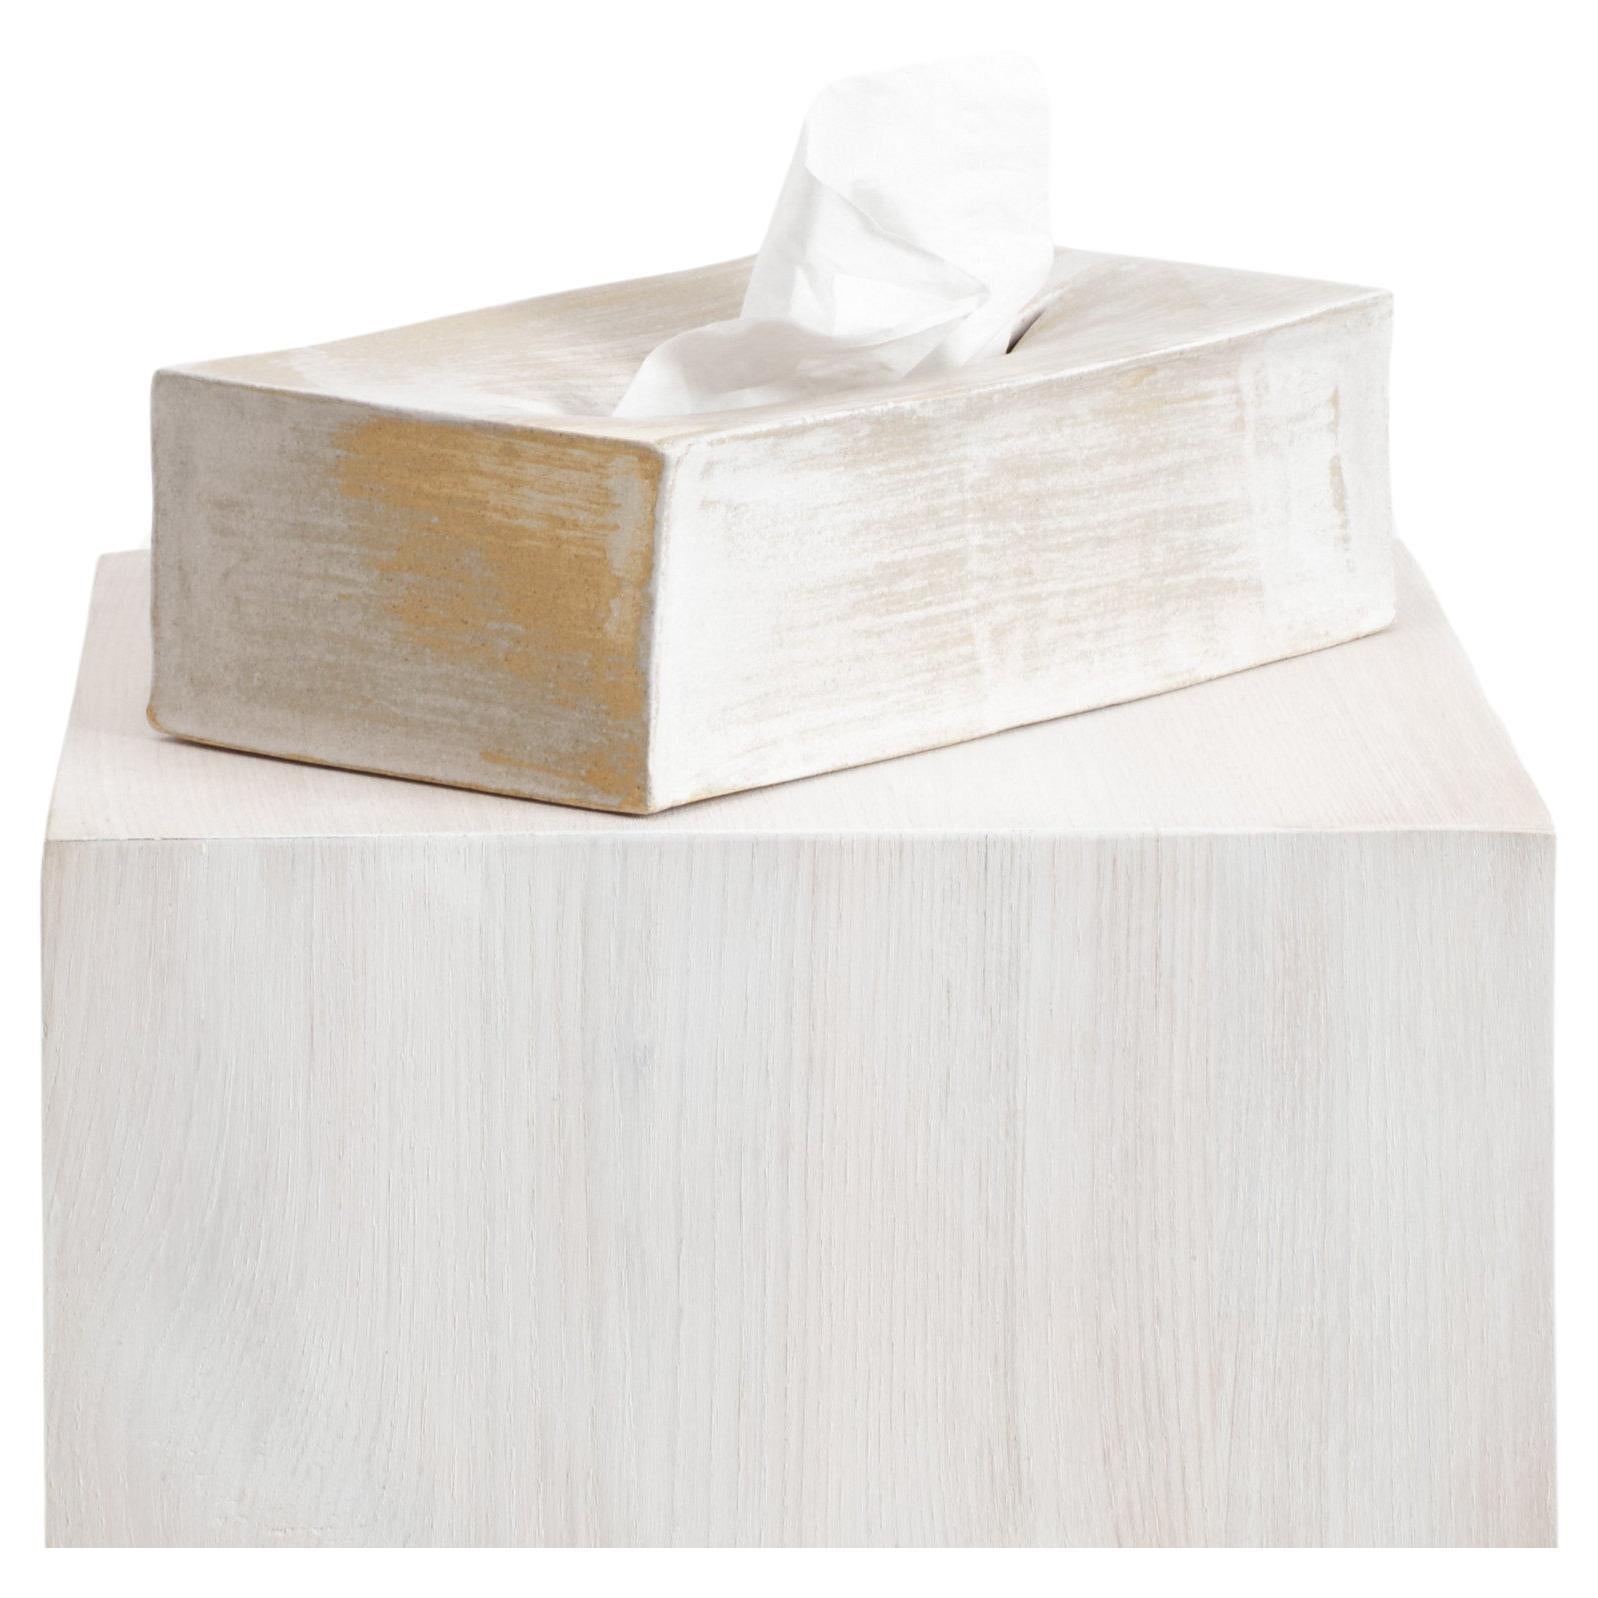 Ceramic Tissue Box in white